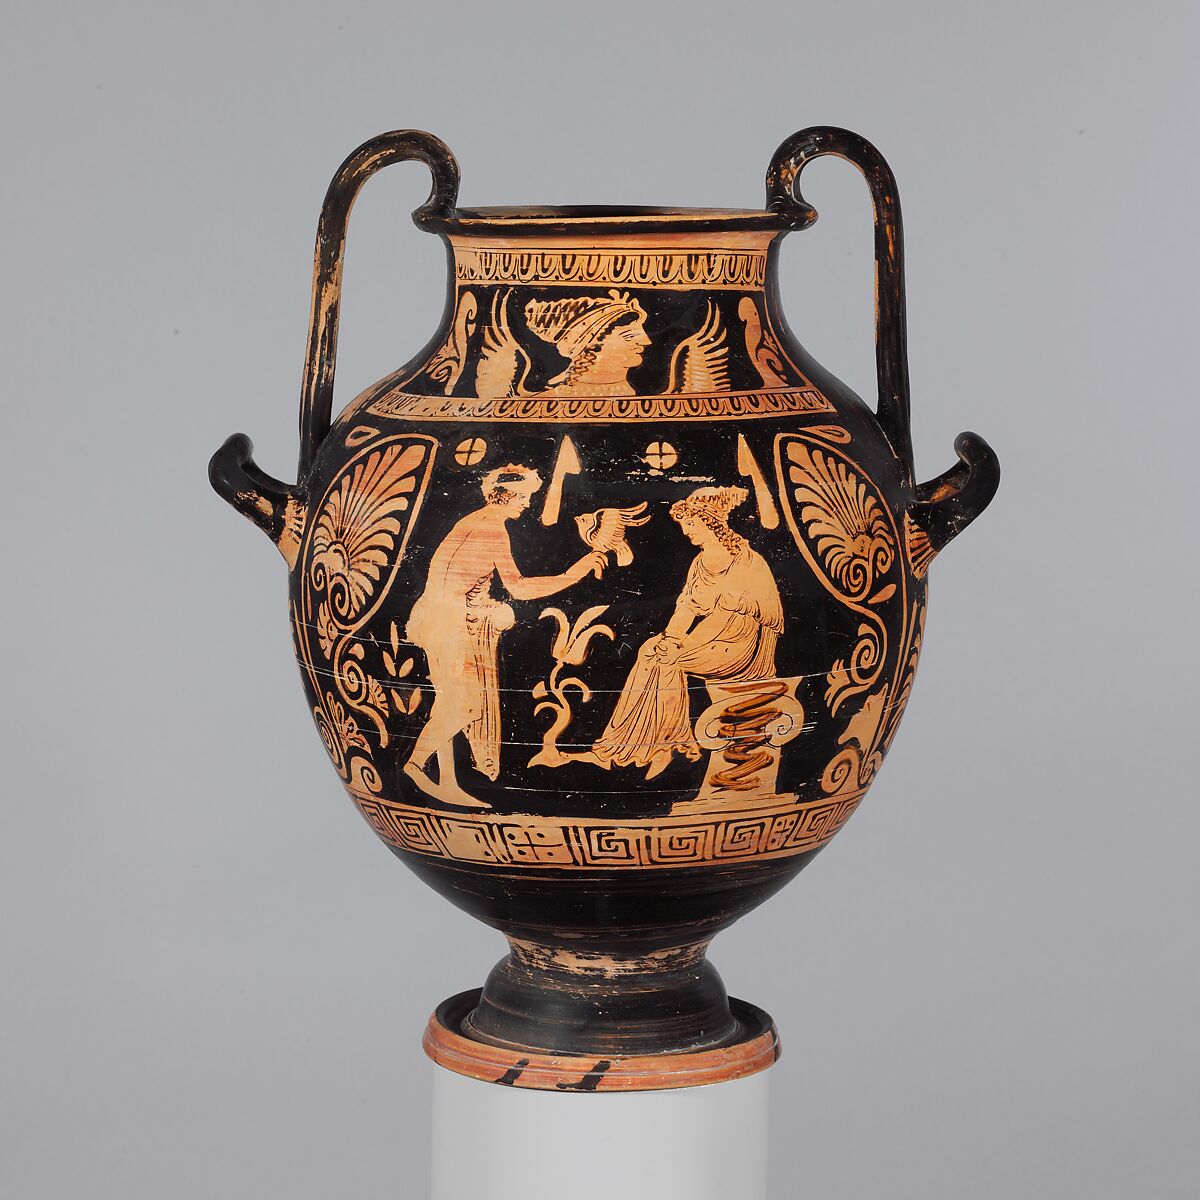 Terracotta nestoris (two-handled jar), Attributed to the Painter of New York 52.11.2, Terracotta, Greek, South Italian, Lucanian 